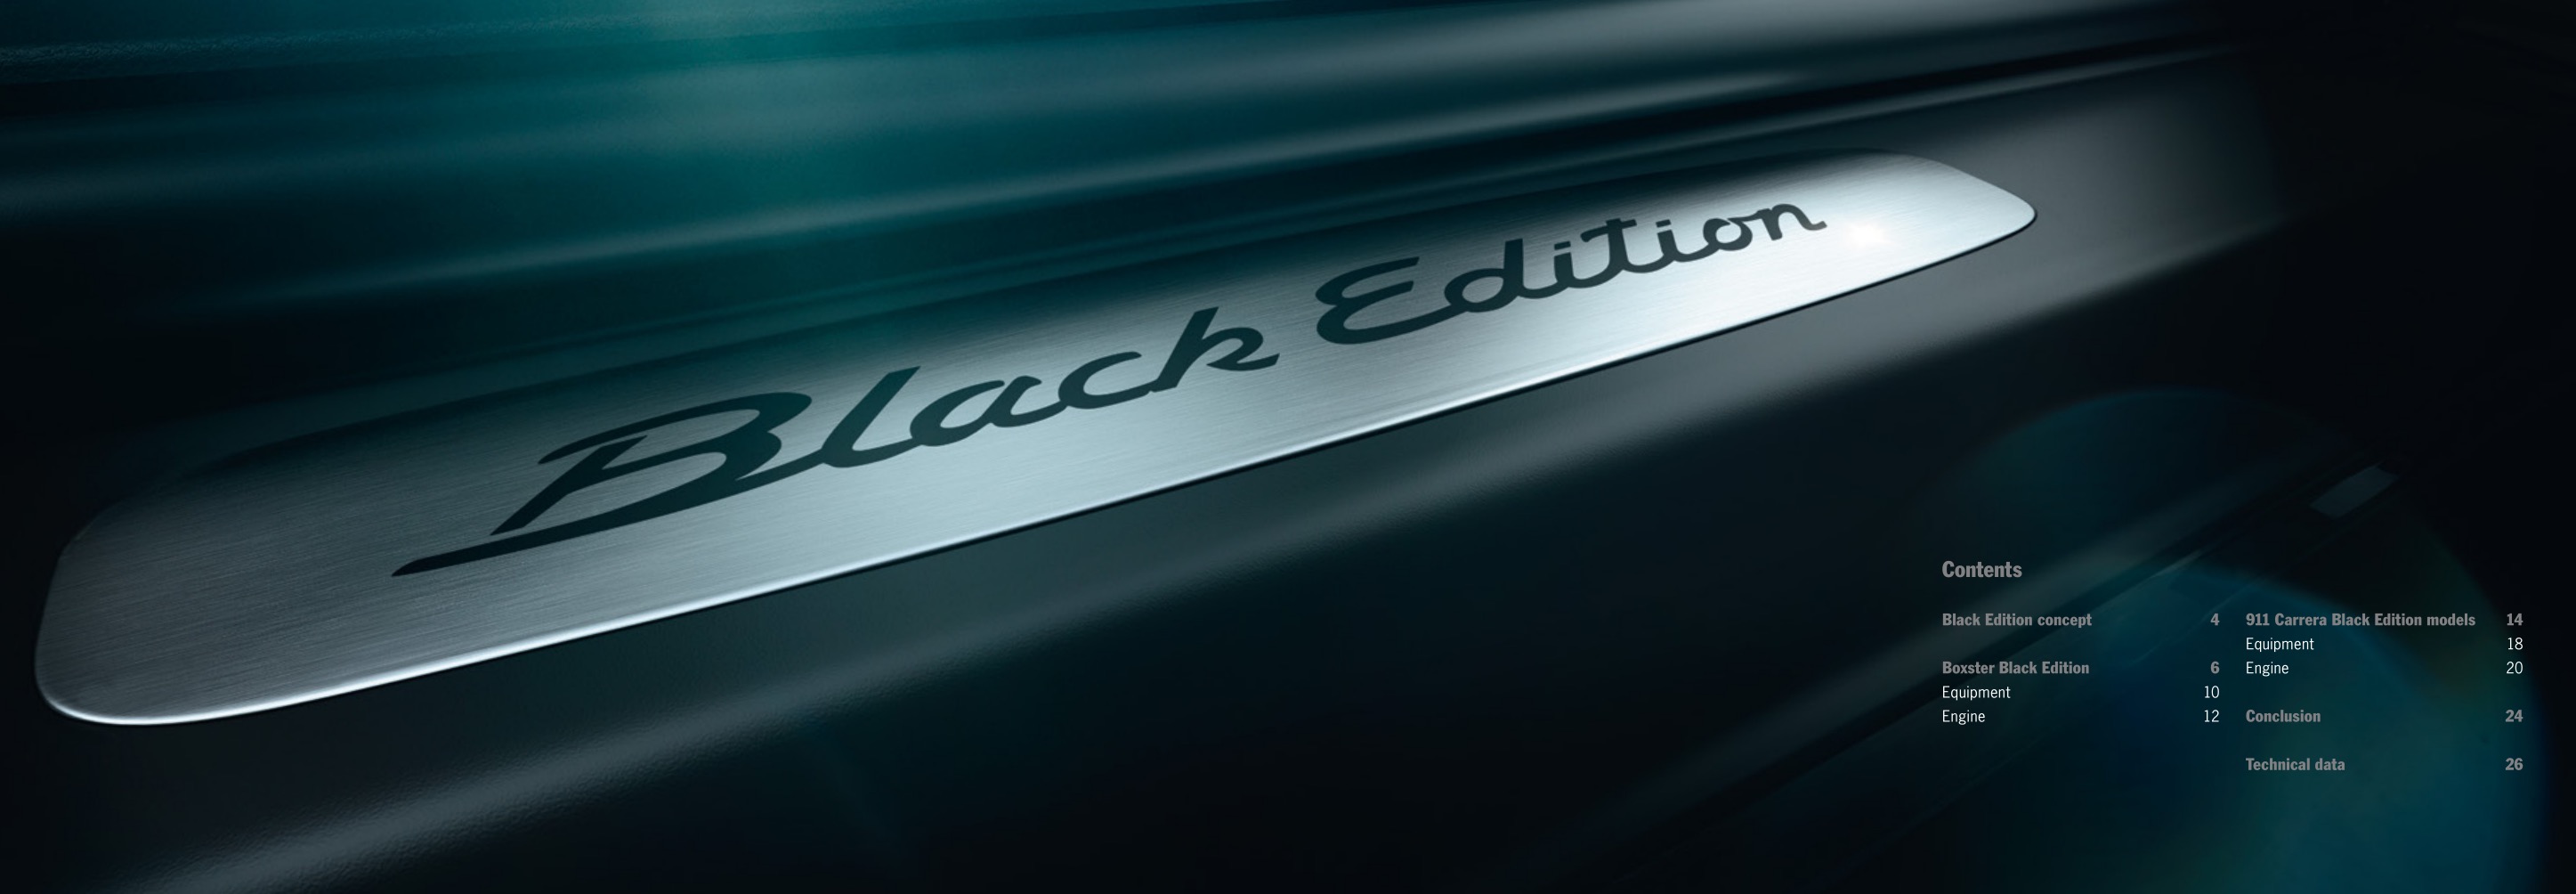 2015 Porsche Black Edition Brochure Page 14